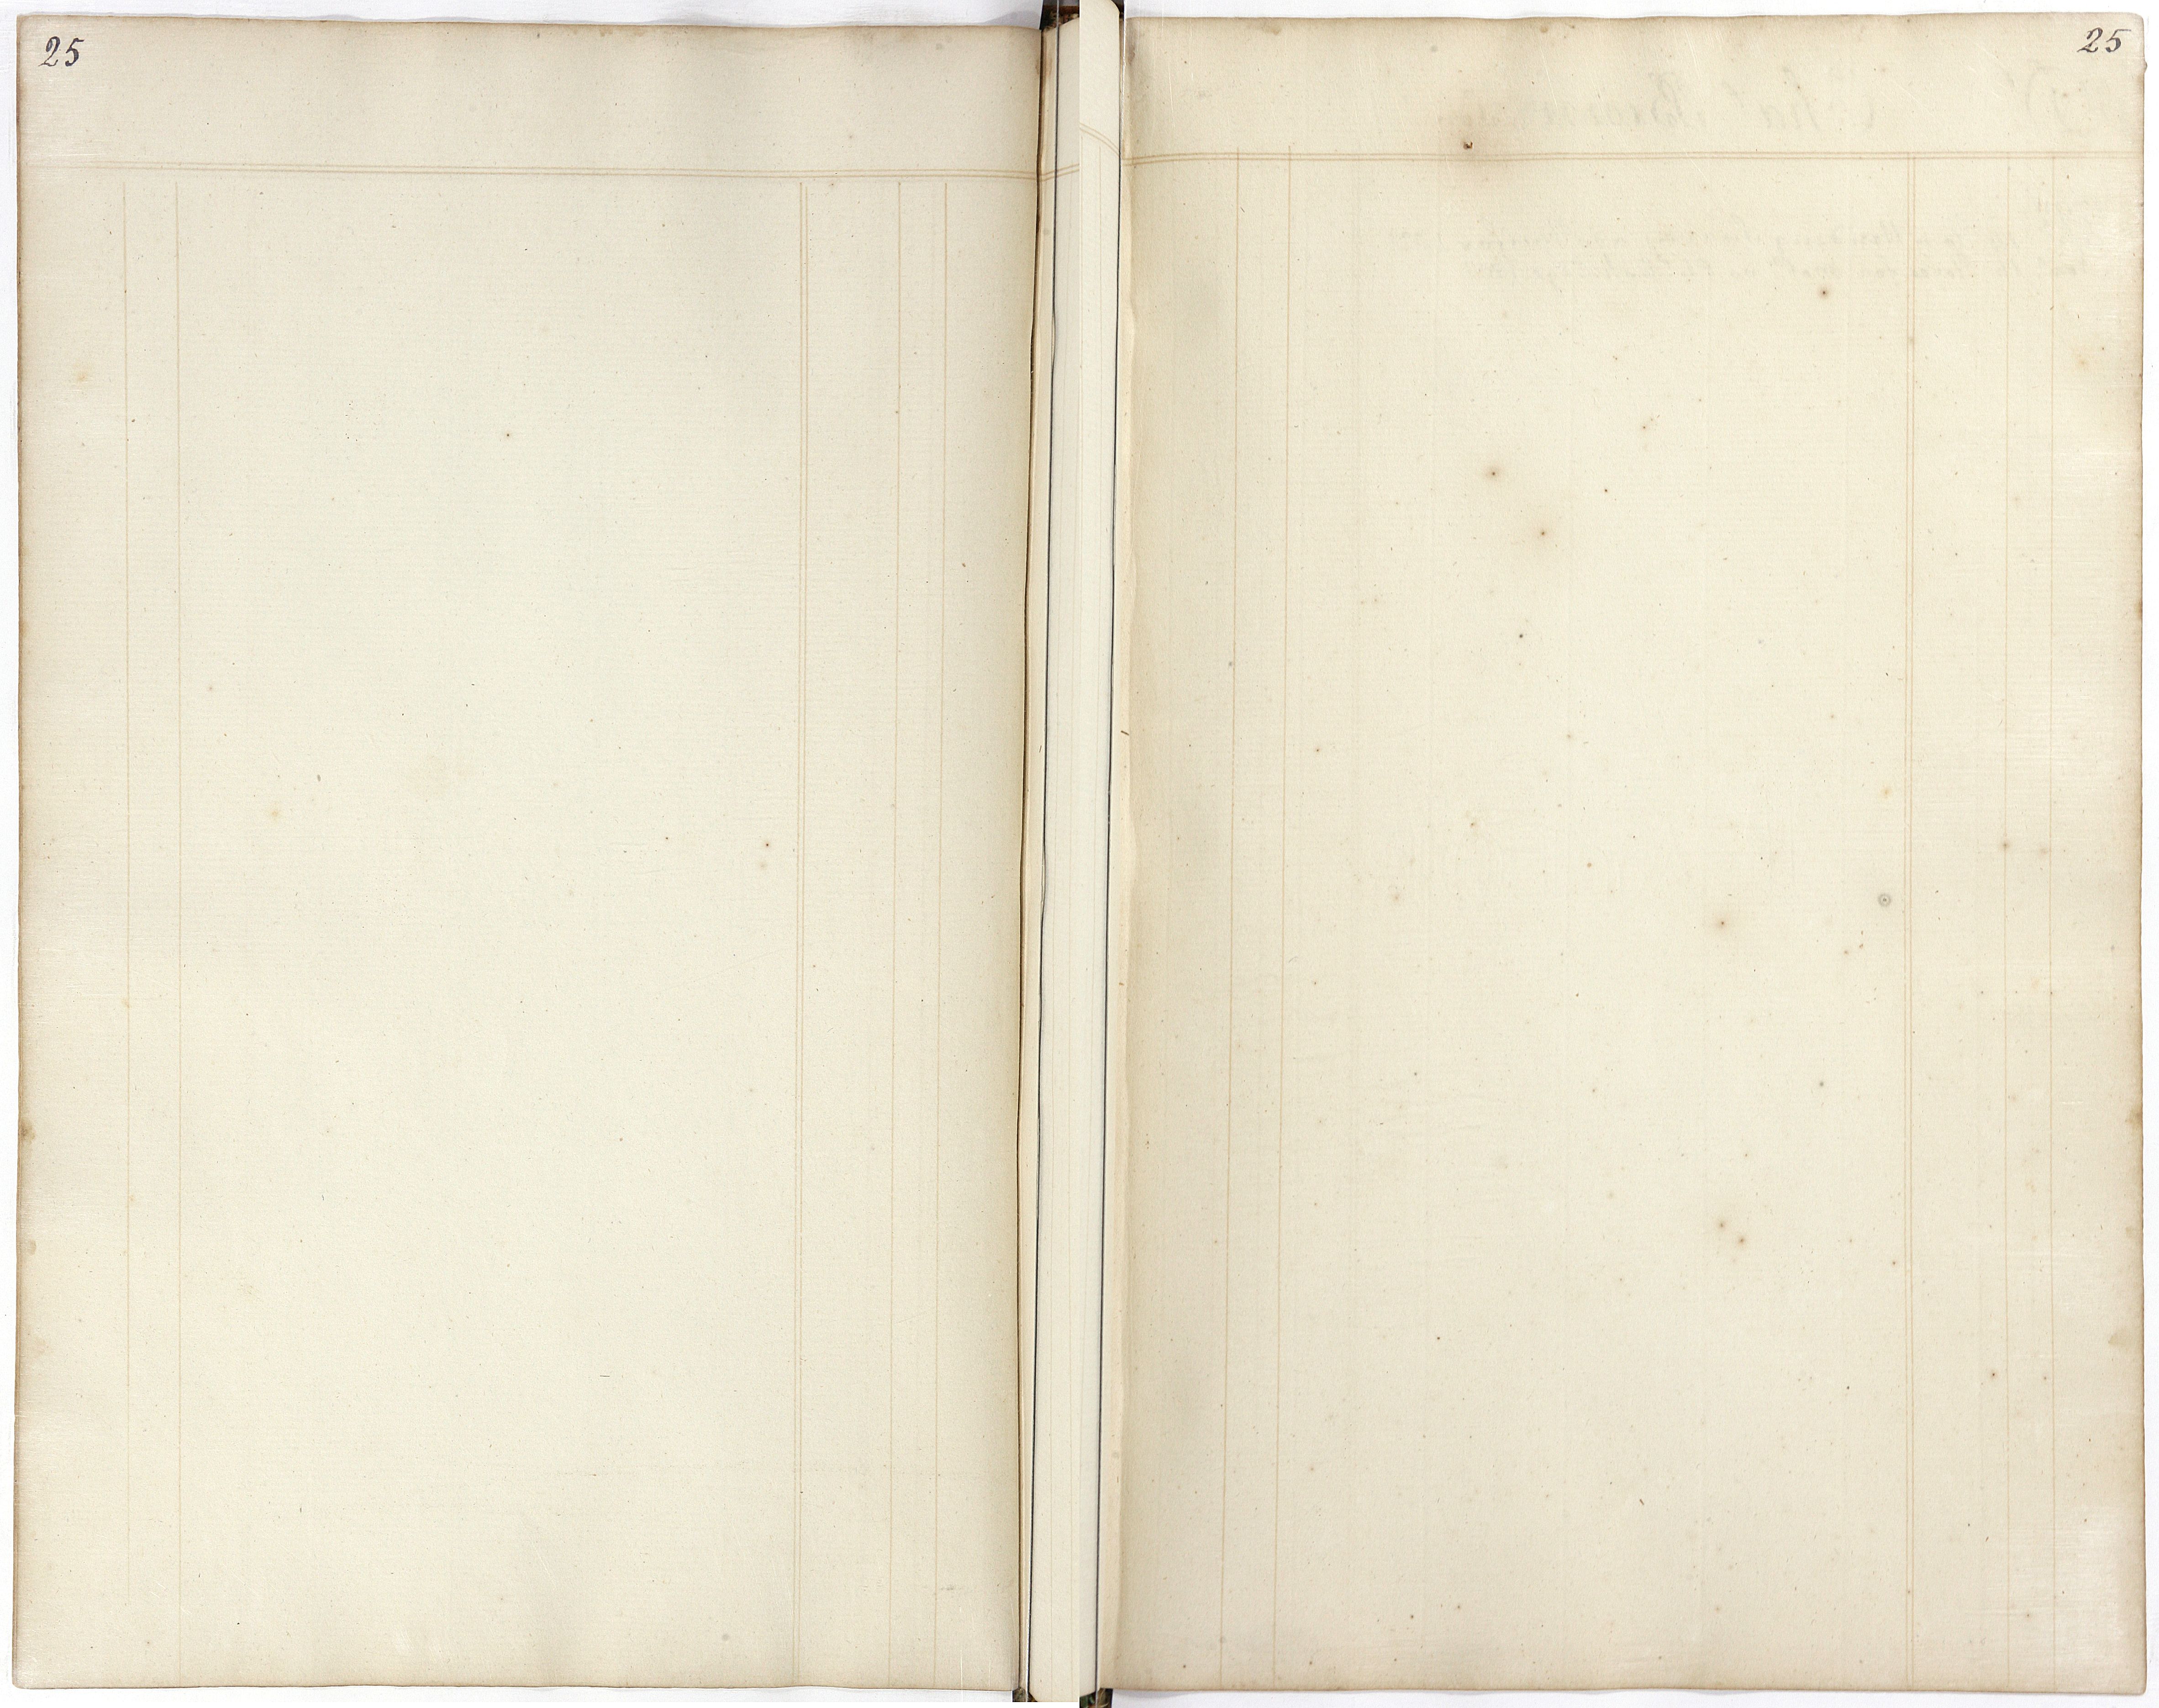 Image of Folio 25 (transcription below)